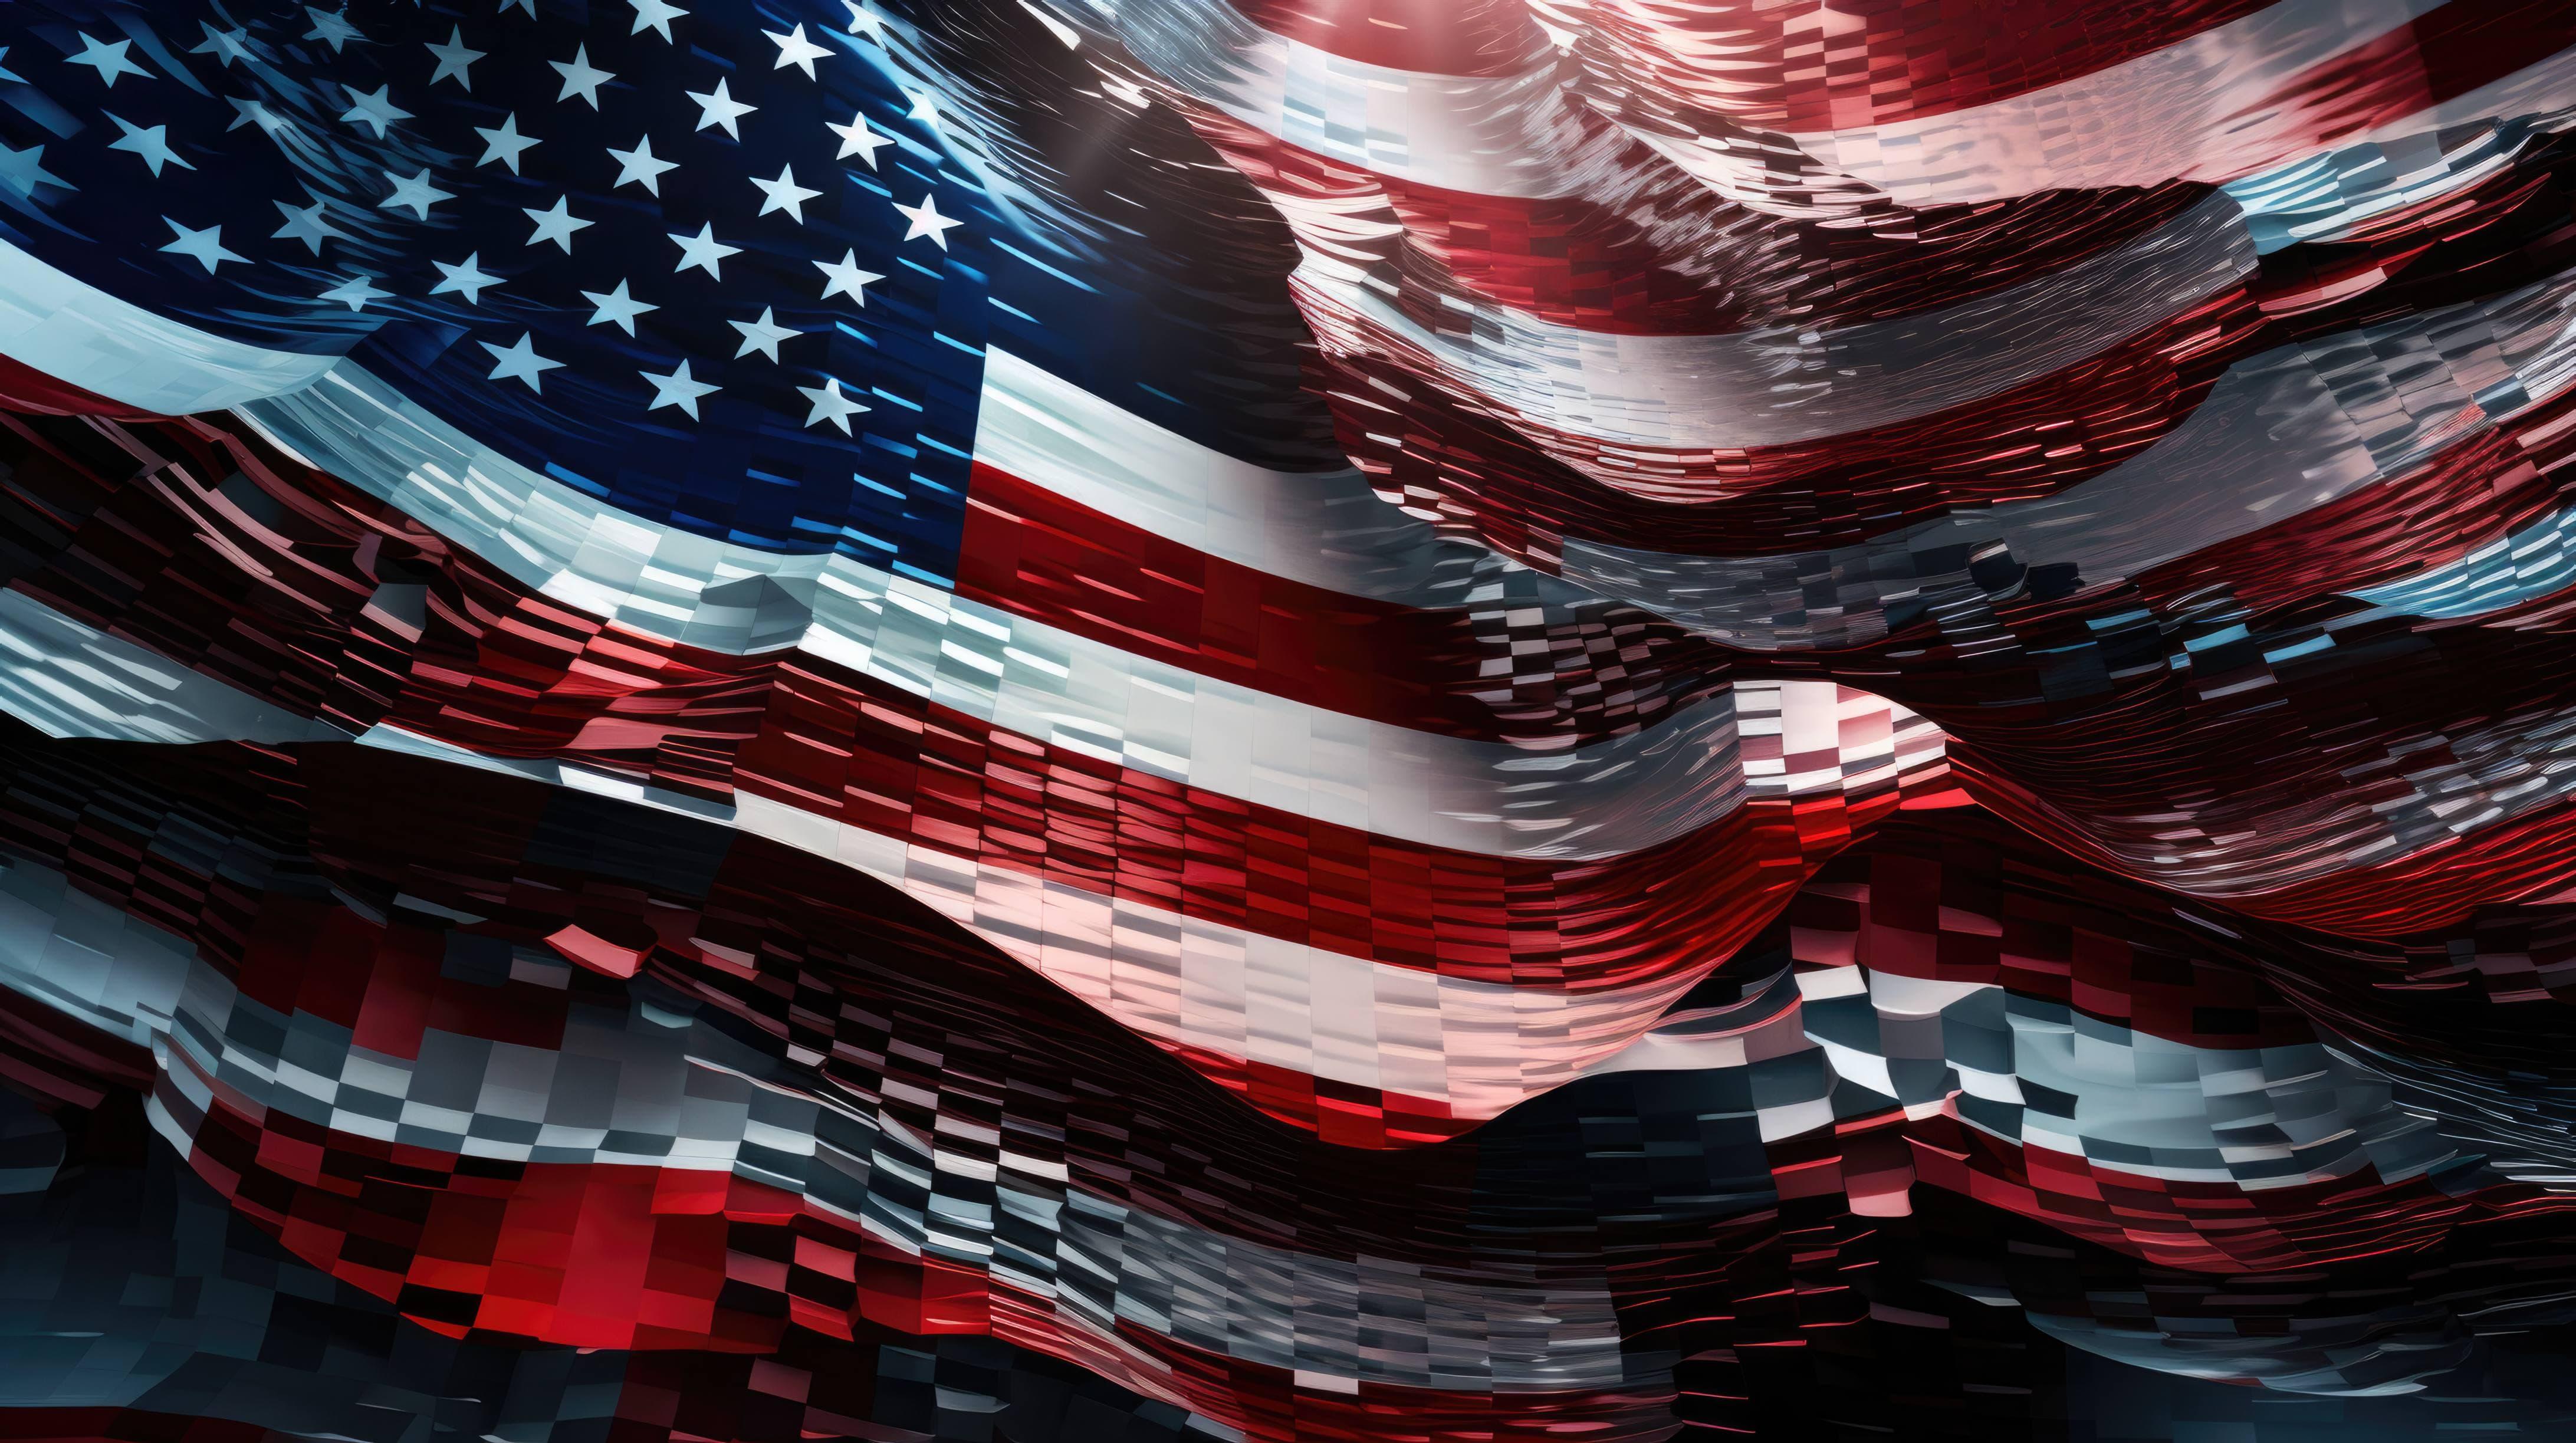 🔥 Free Download A 4k Desktop Wallpaper Of An American Flag Created From Digital Pixels